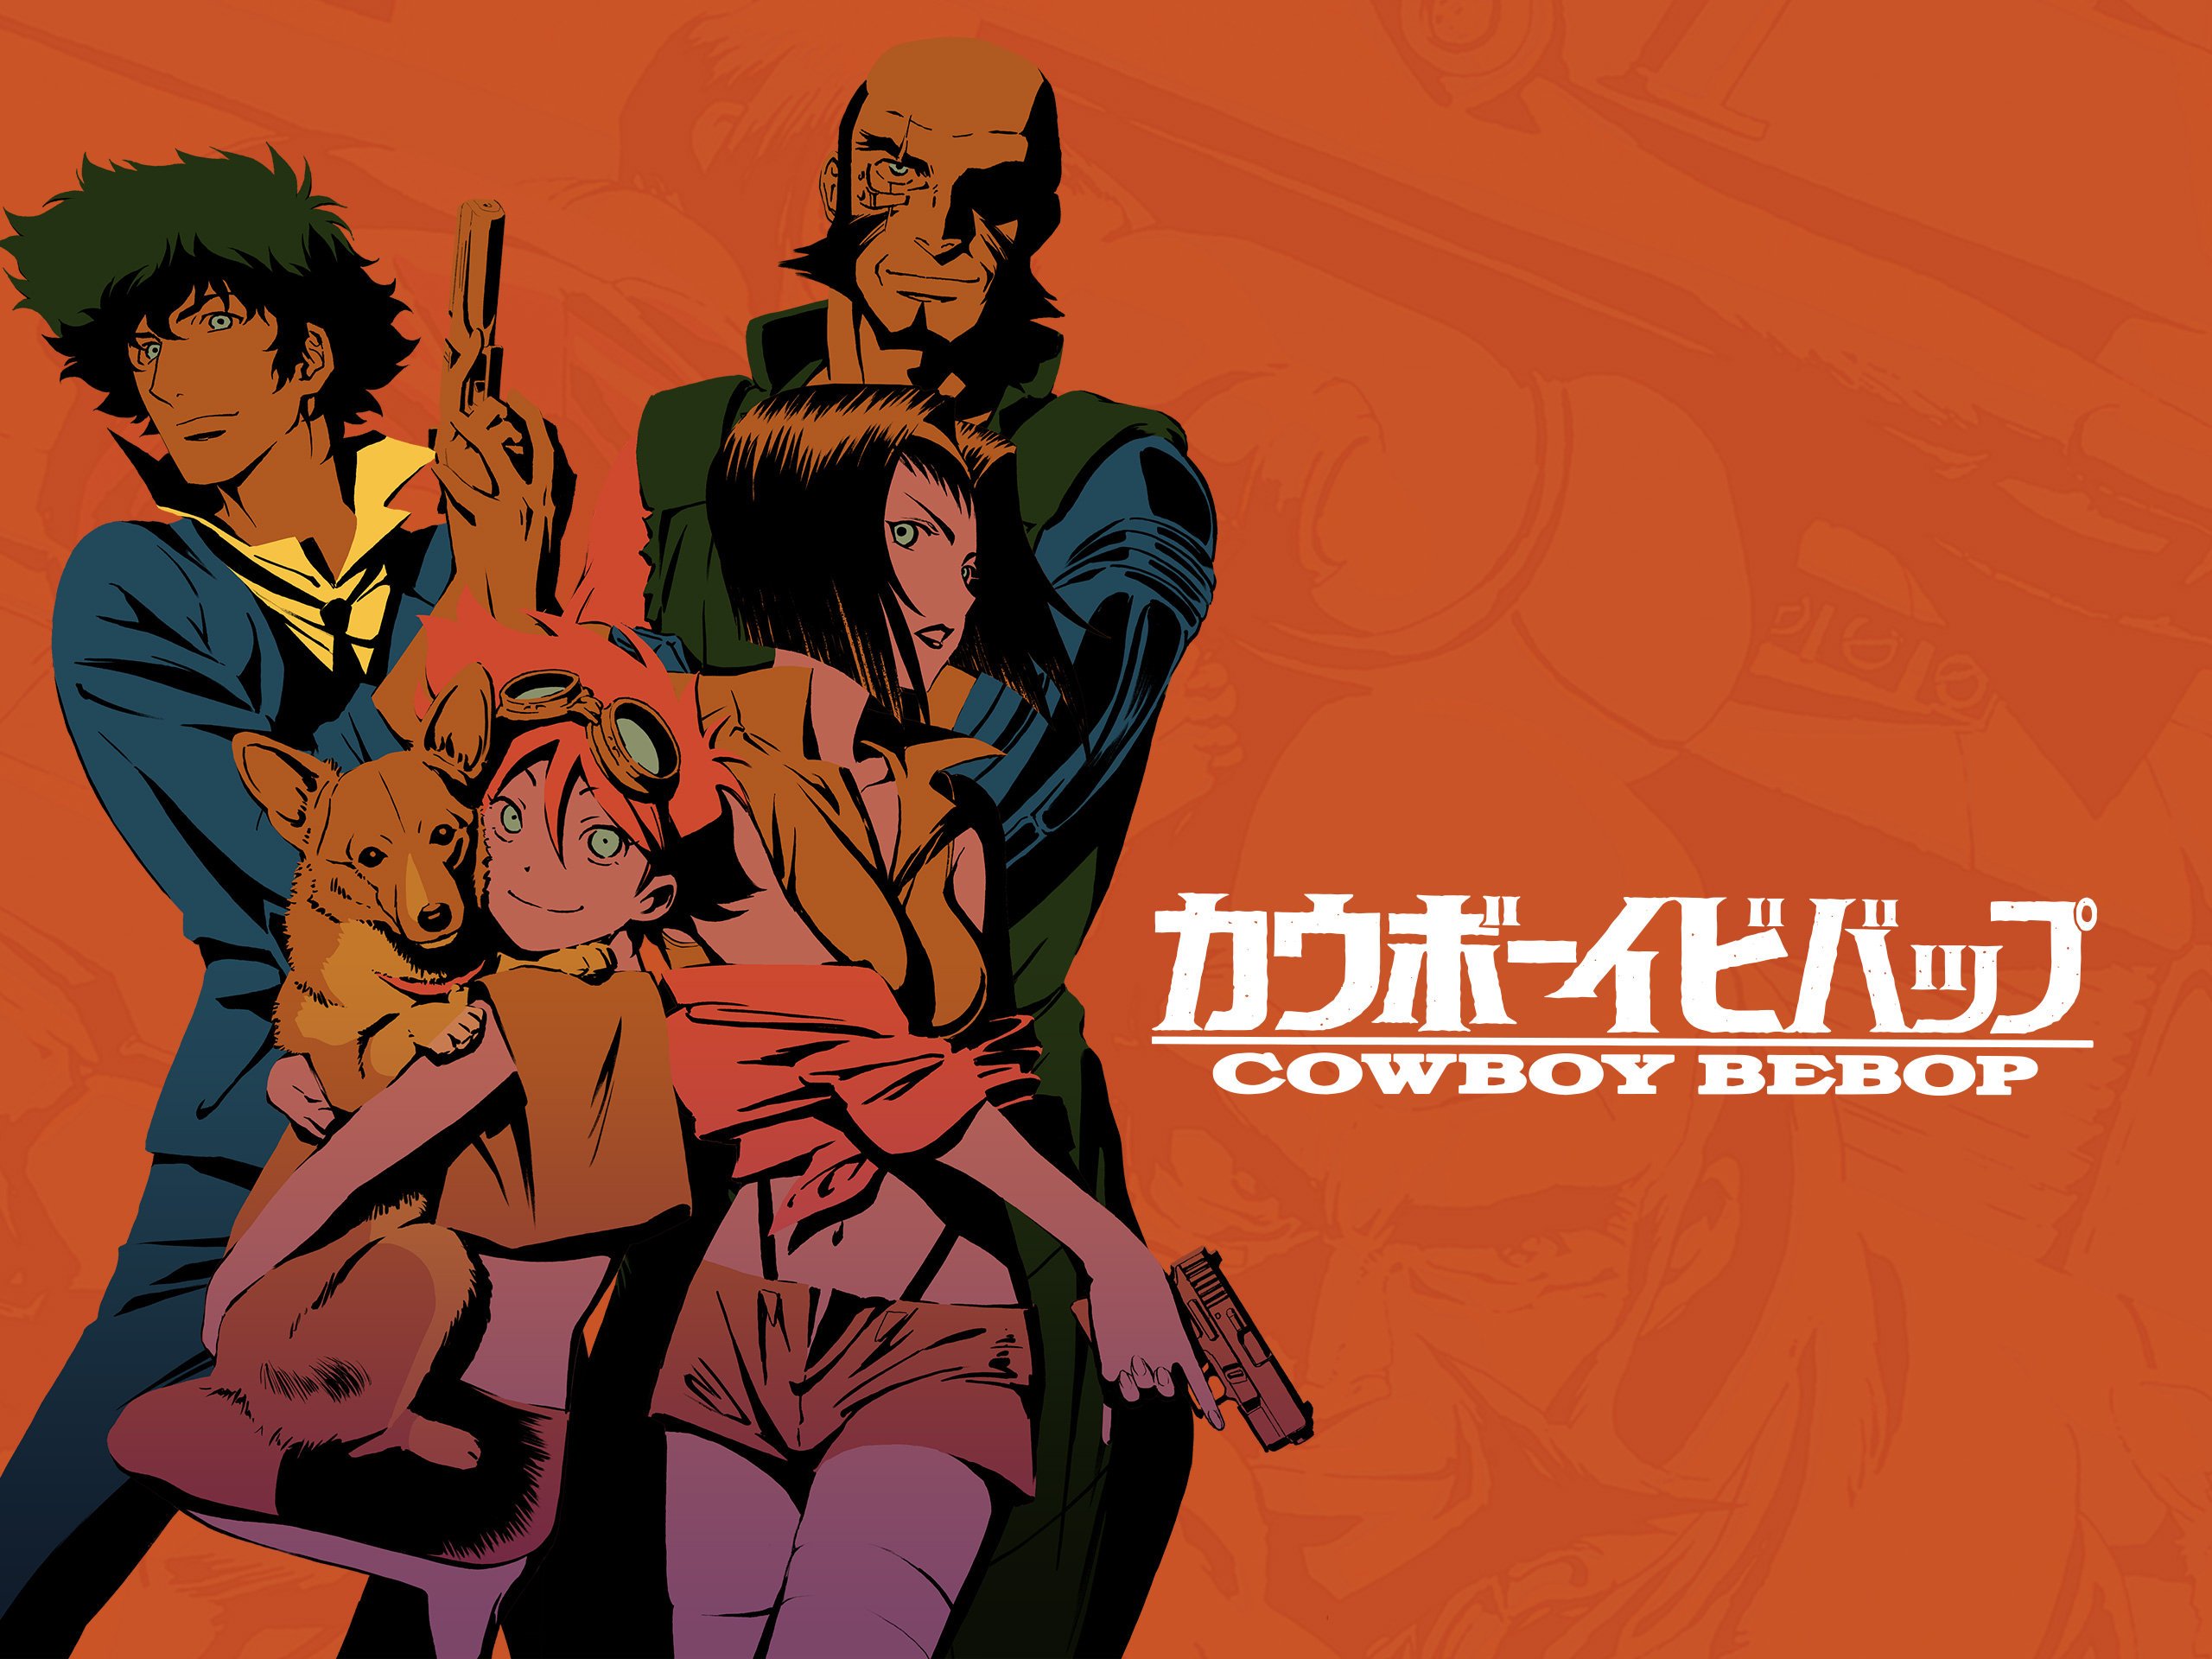 Netflix Acquires Rights to Original Cowboy Bebop Anime